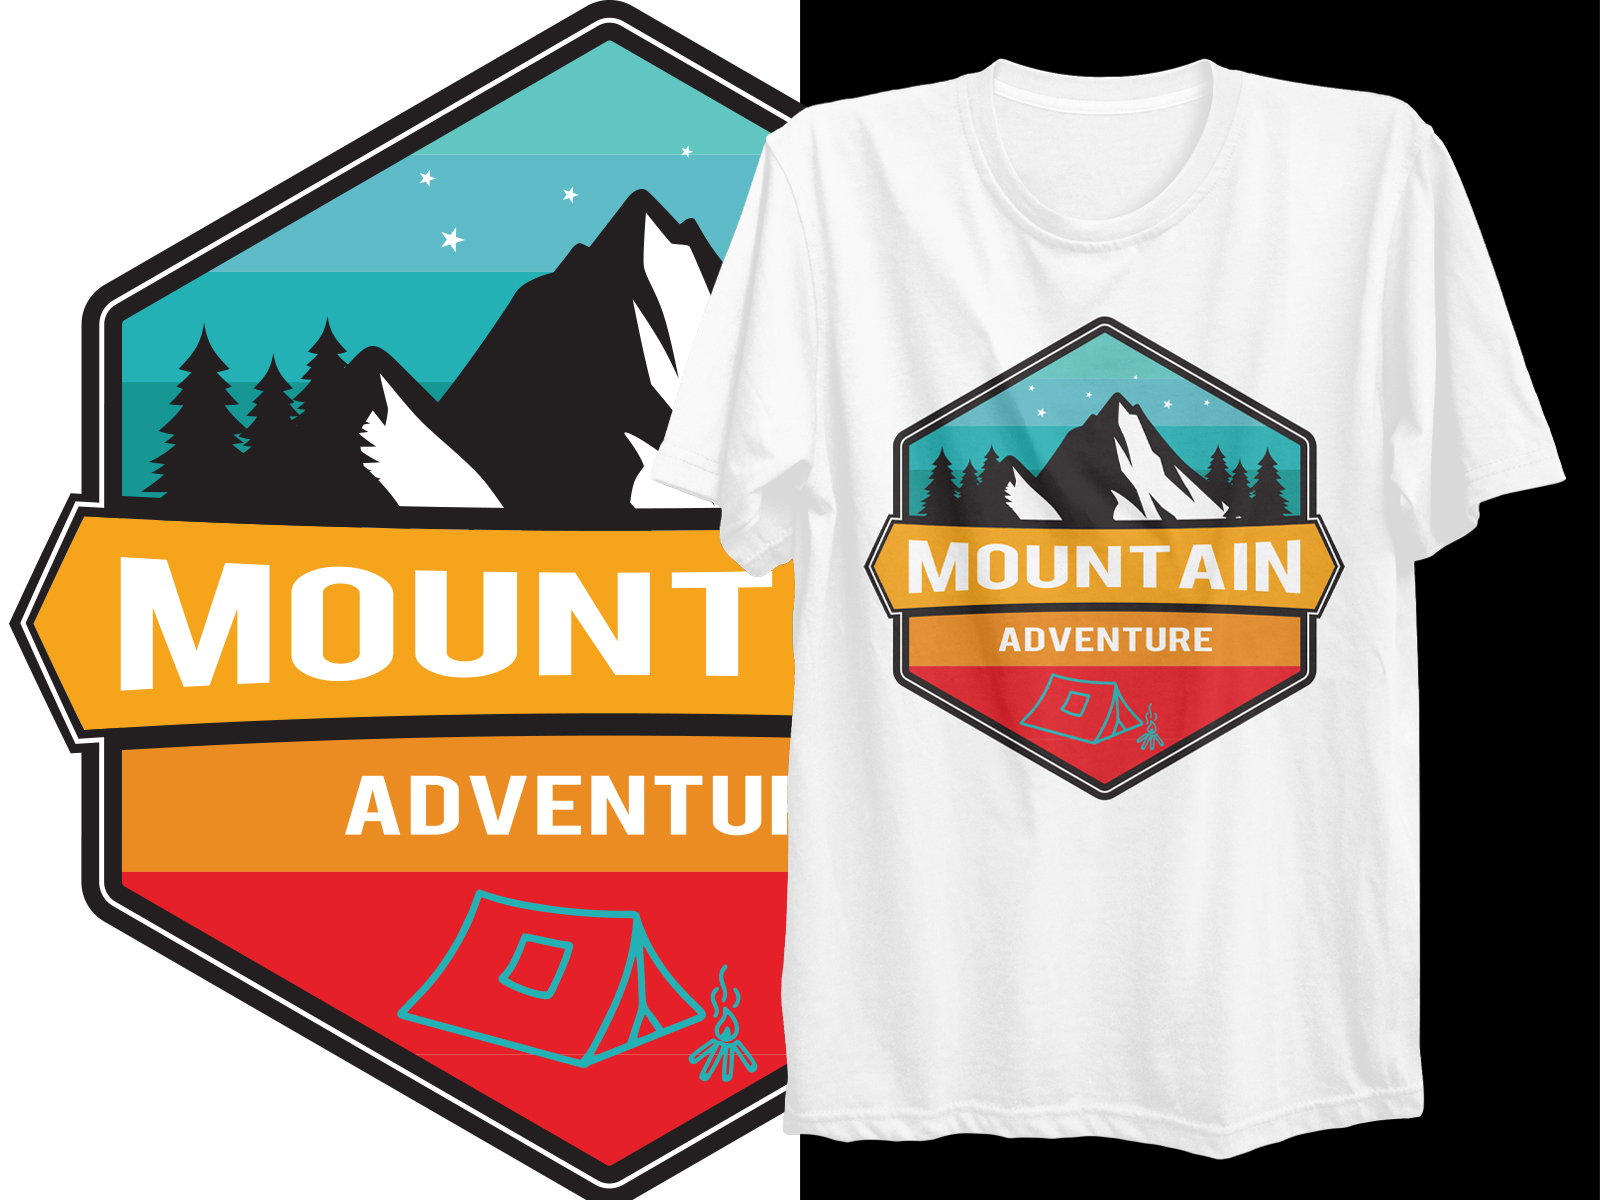 Adventure T-Shirt Design by Design Media on Dribbble